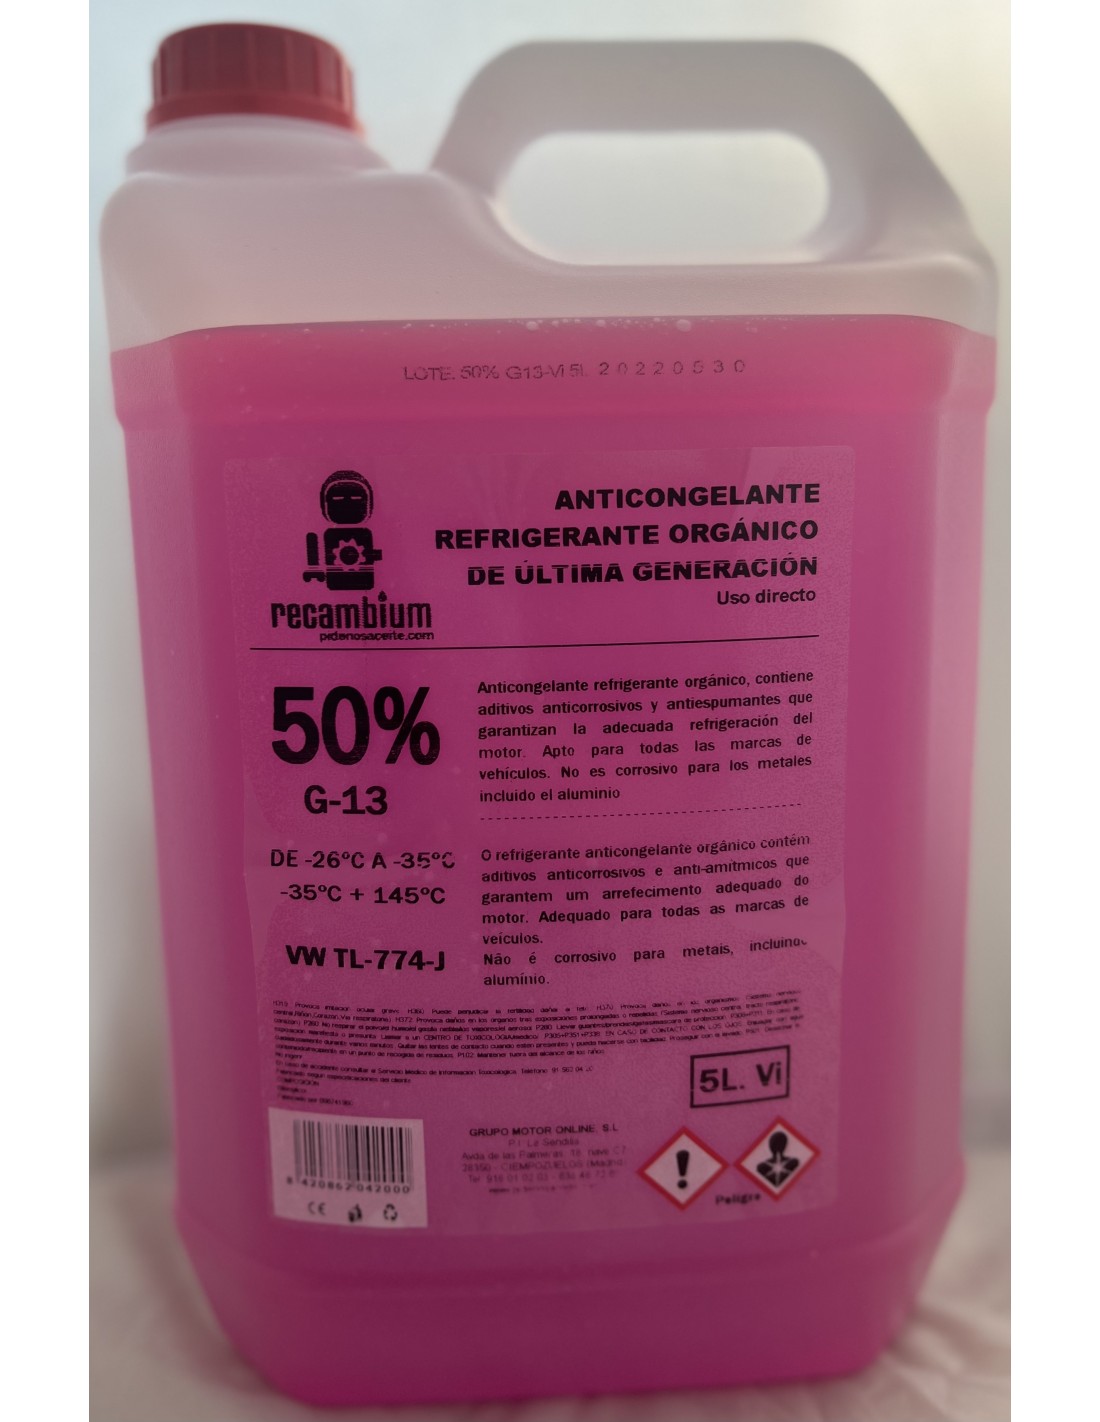 Anticongelante refrigerante orgánico 50% G-13 Recambium -10,90 €